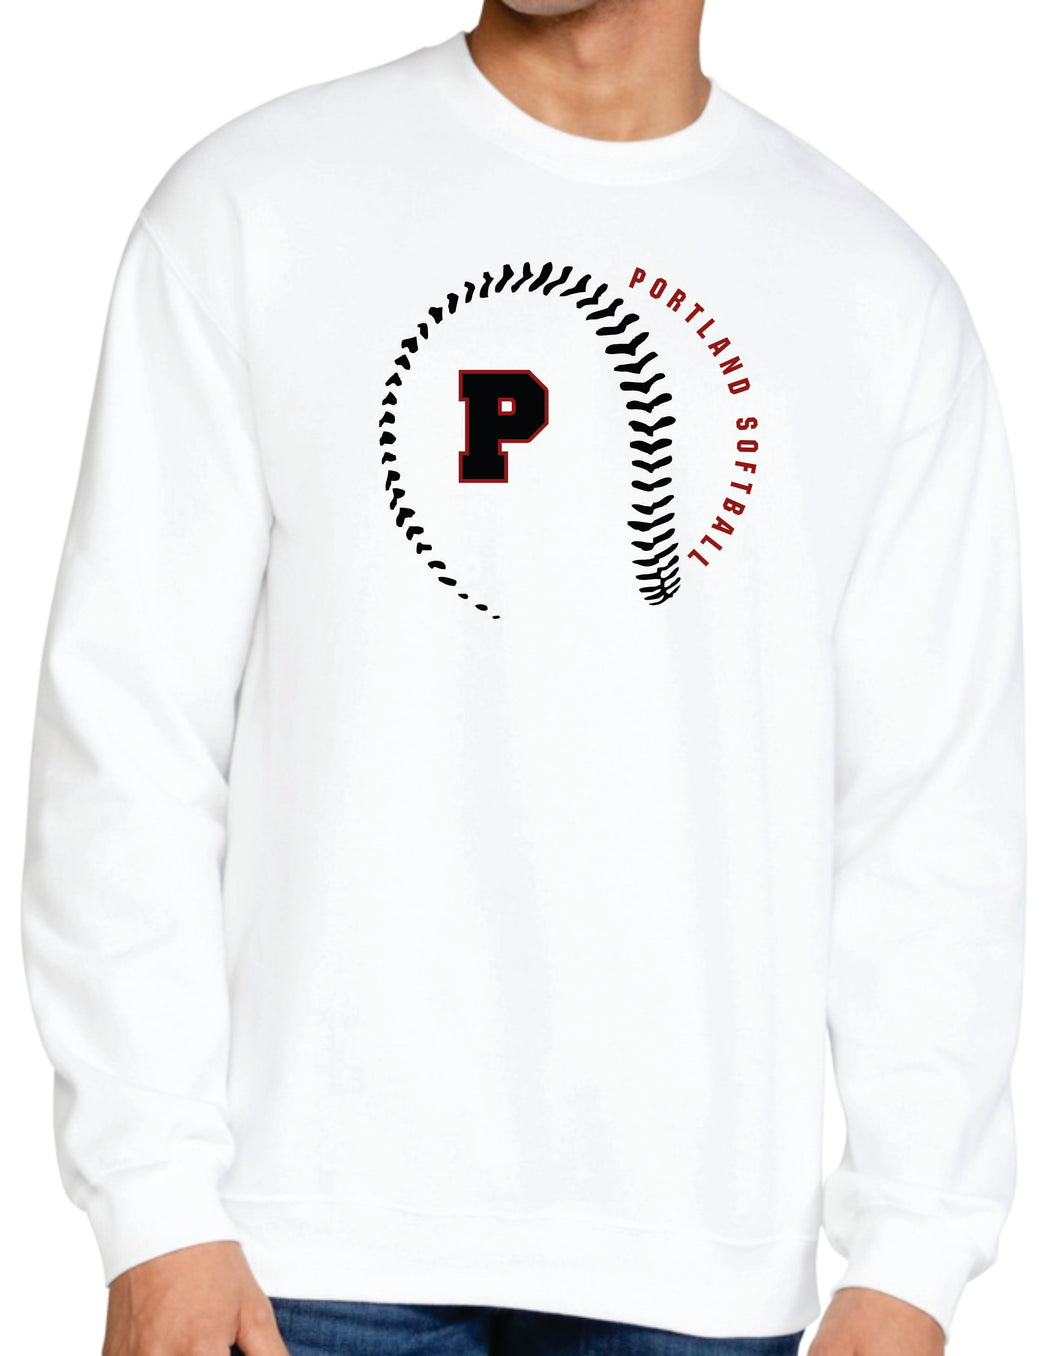 PHS Softball Long Sleeve